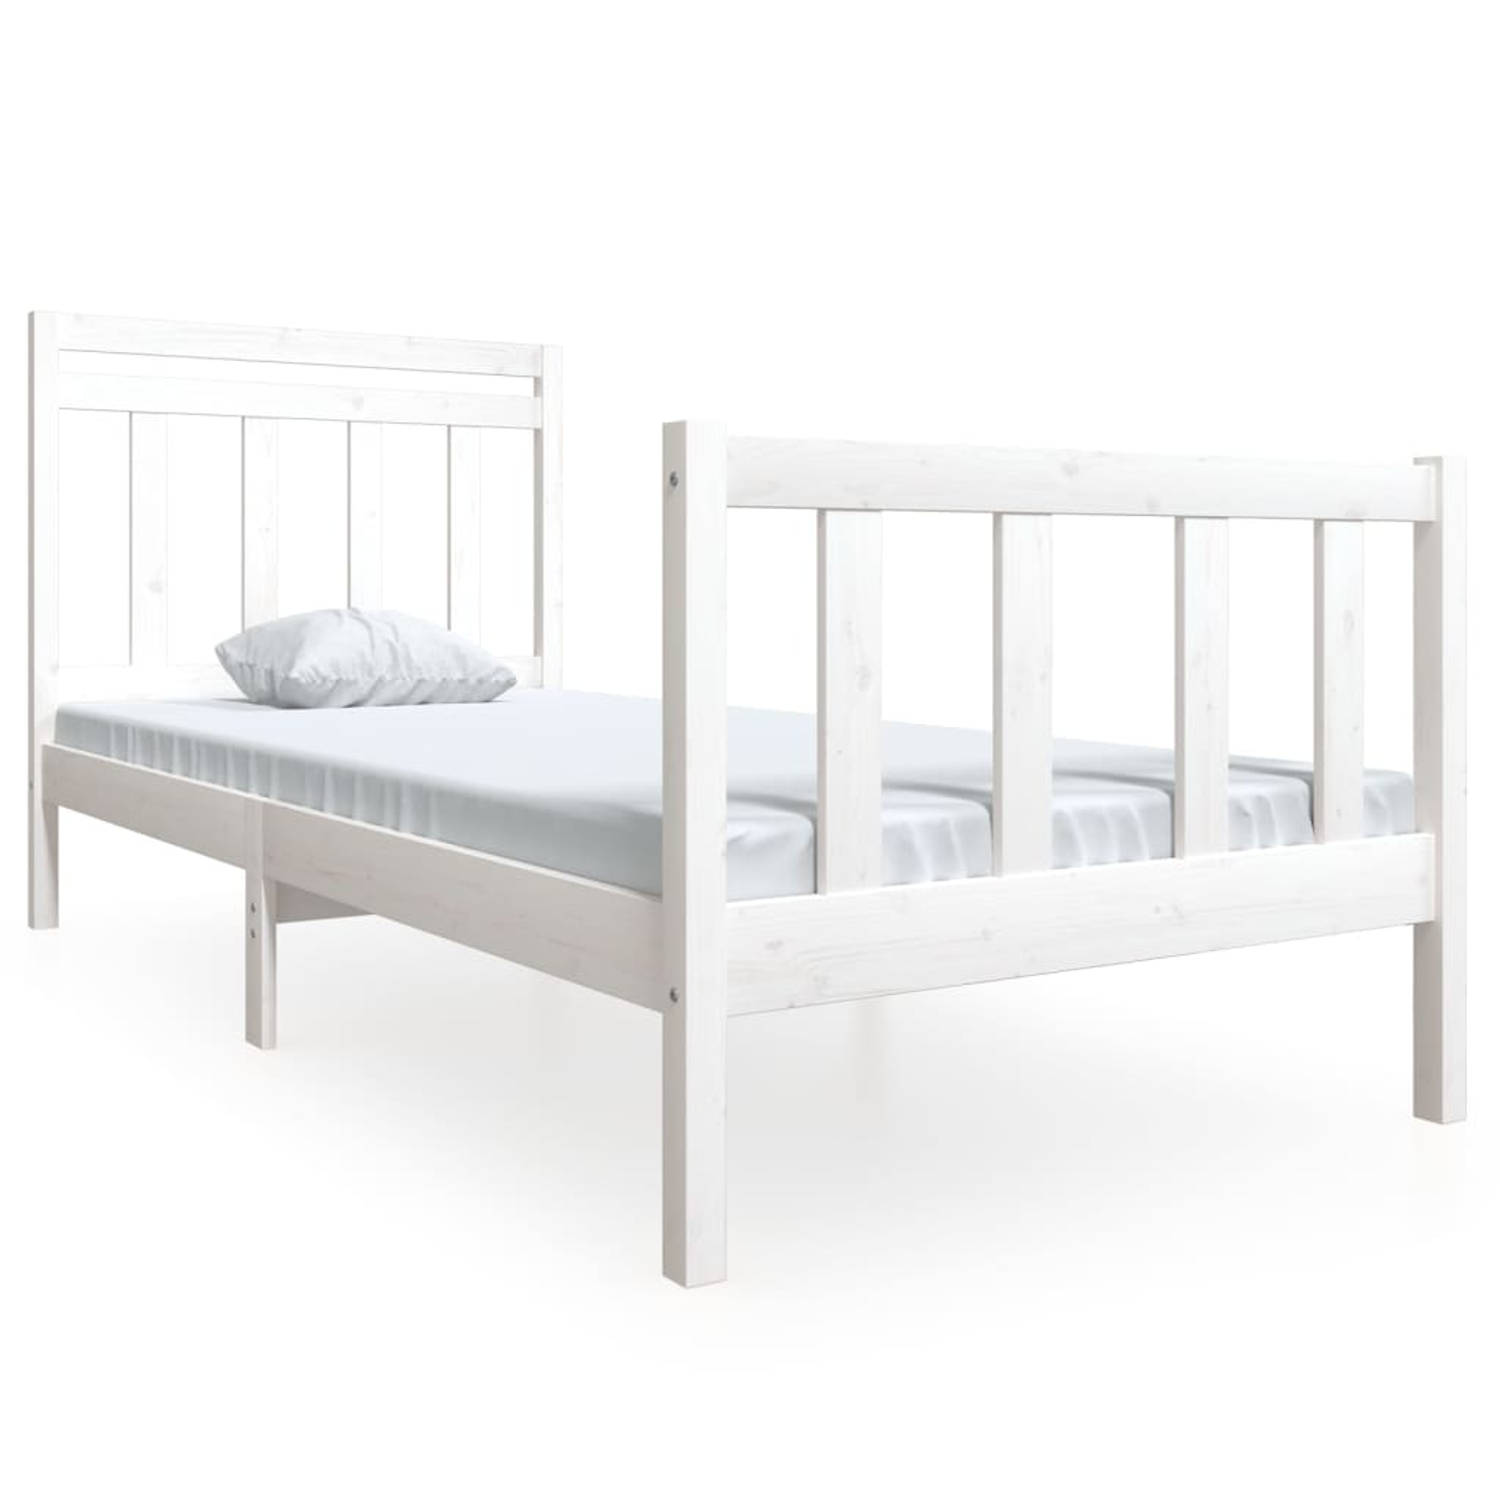 The Living Store Bedframe massief hout wit 90x190 cm 3FT6 Single - Bedframe - Bedframes - Eenpersoonsbed - Bed - Bedombouw - Frame - Bed Frame - Ledikant - Bedframe Met Hoofdeinde